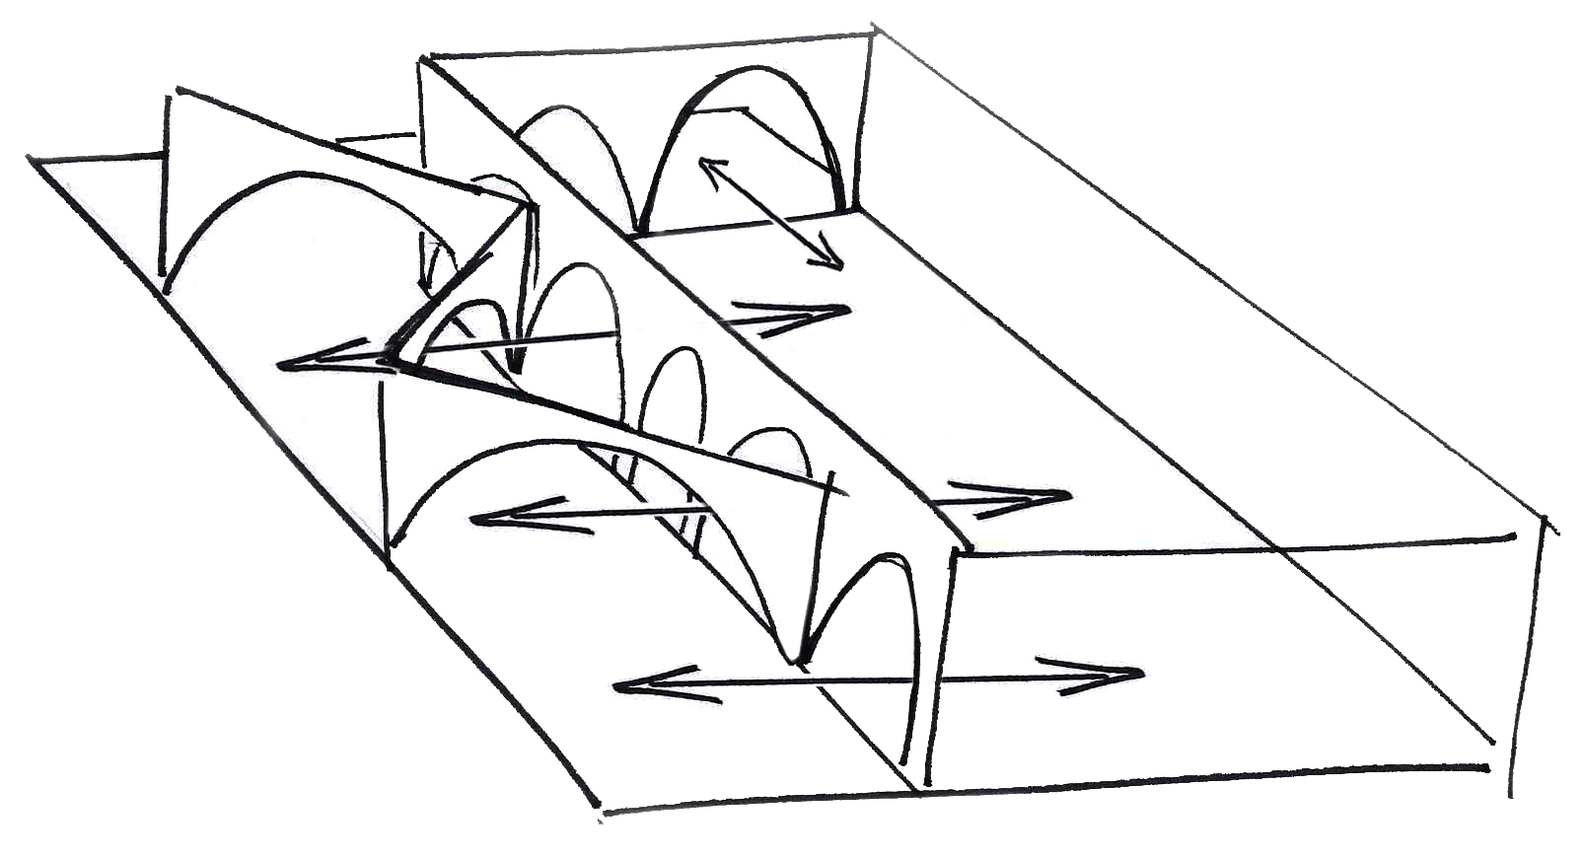 Courtyard_sketch_diagram